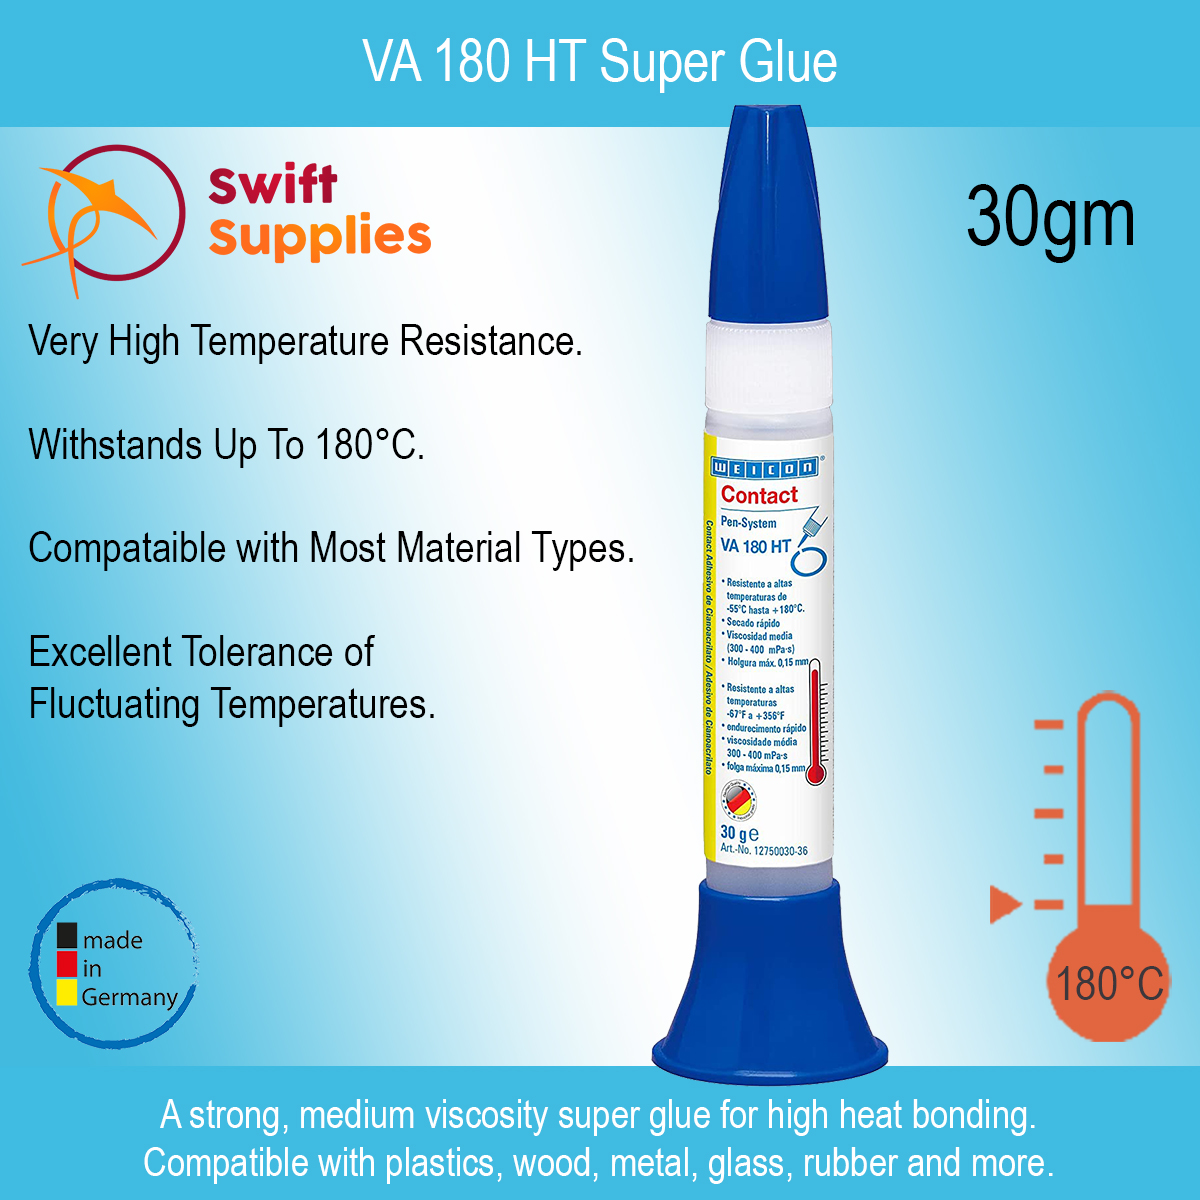 VA 180 HT Super Glue Info Image, 030